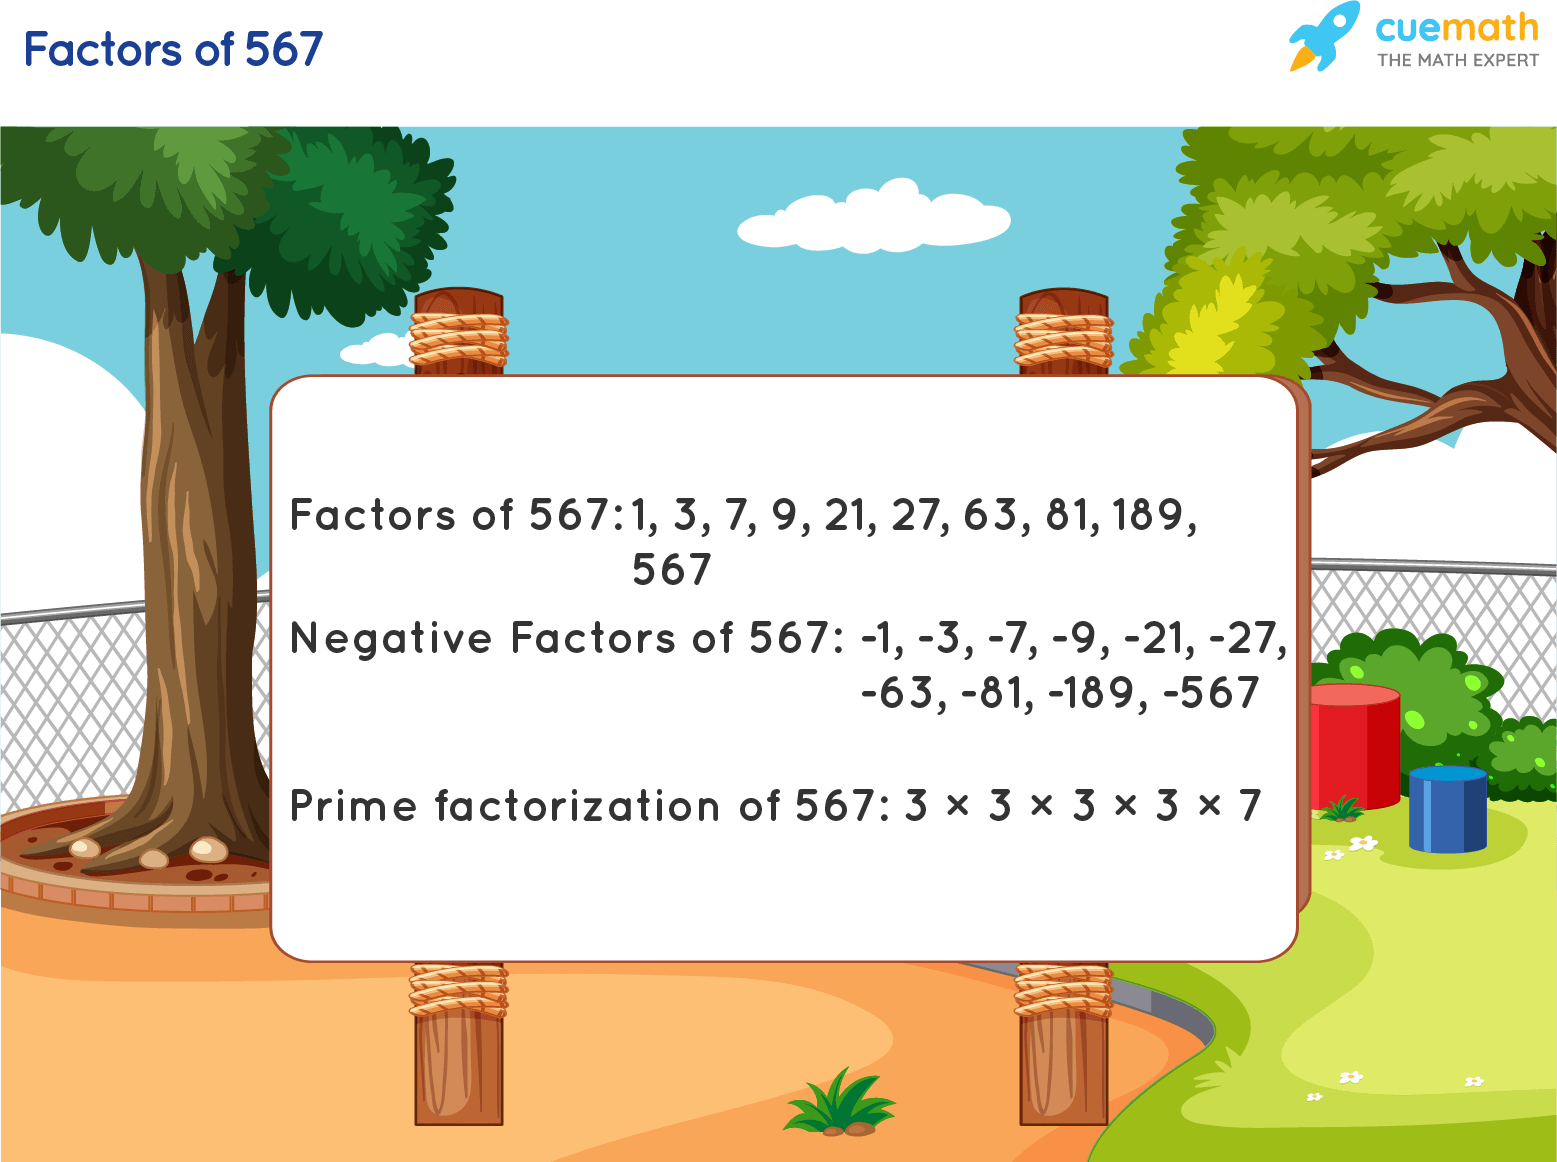 Factors of 567 - Find Prime Factorization/Factors of 567